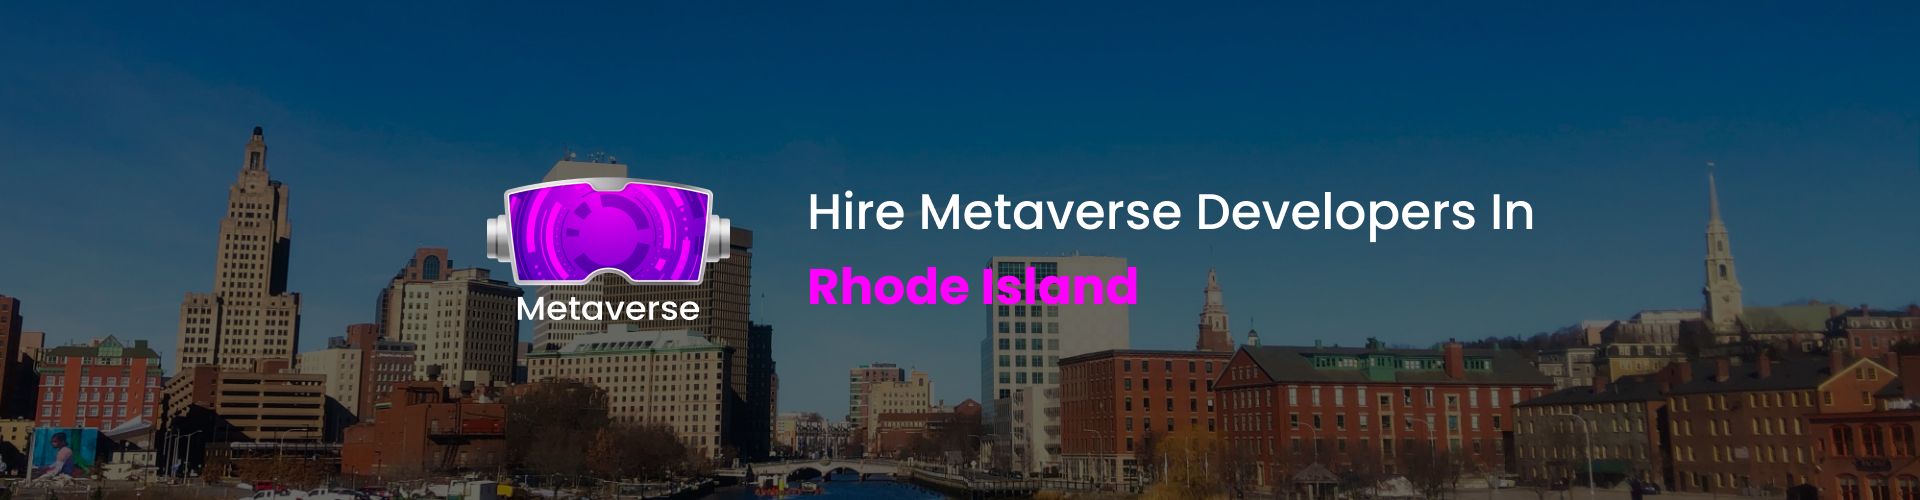 hire metaverse developers in rhode island